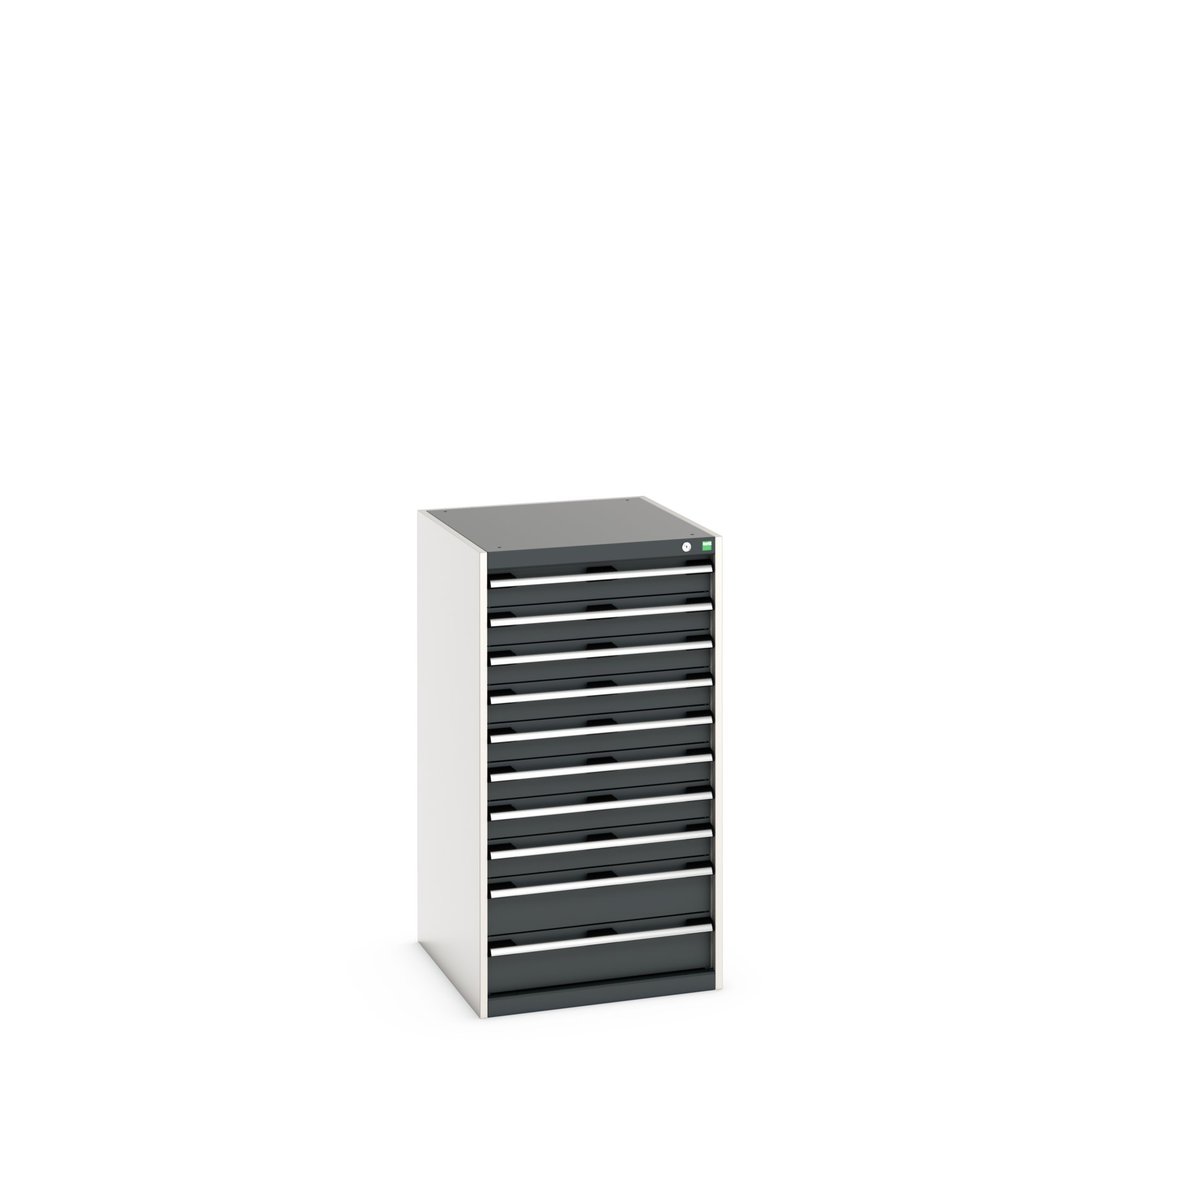 40027043. - cubio drawer cabinet